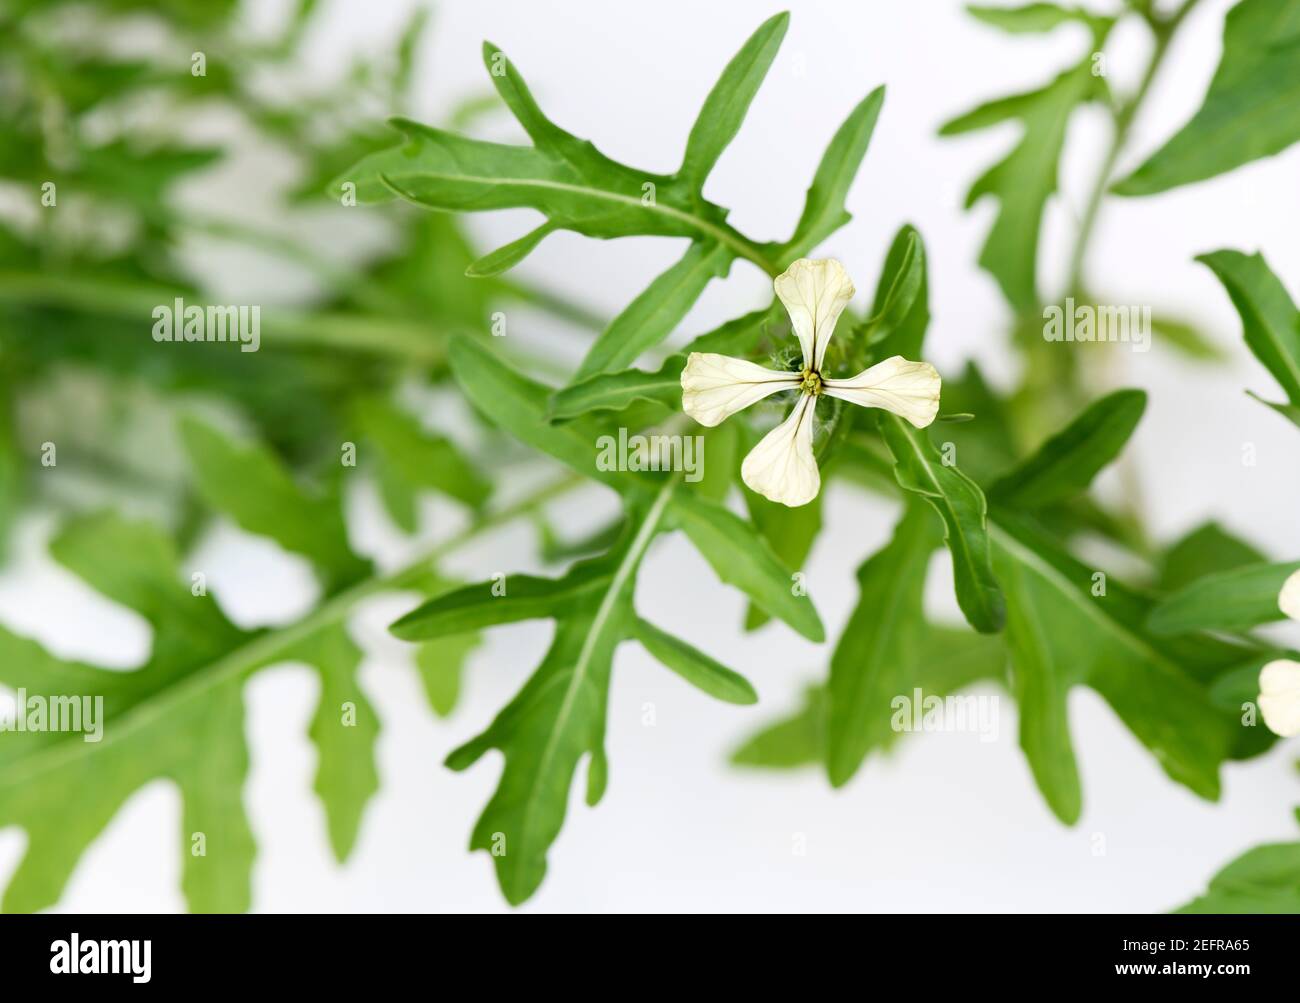 Arugula, Eruca vesicaria, Rocket, closeup of plant leaves and flower Stock Photo